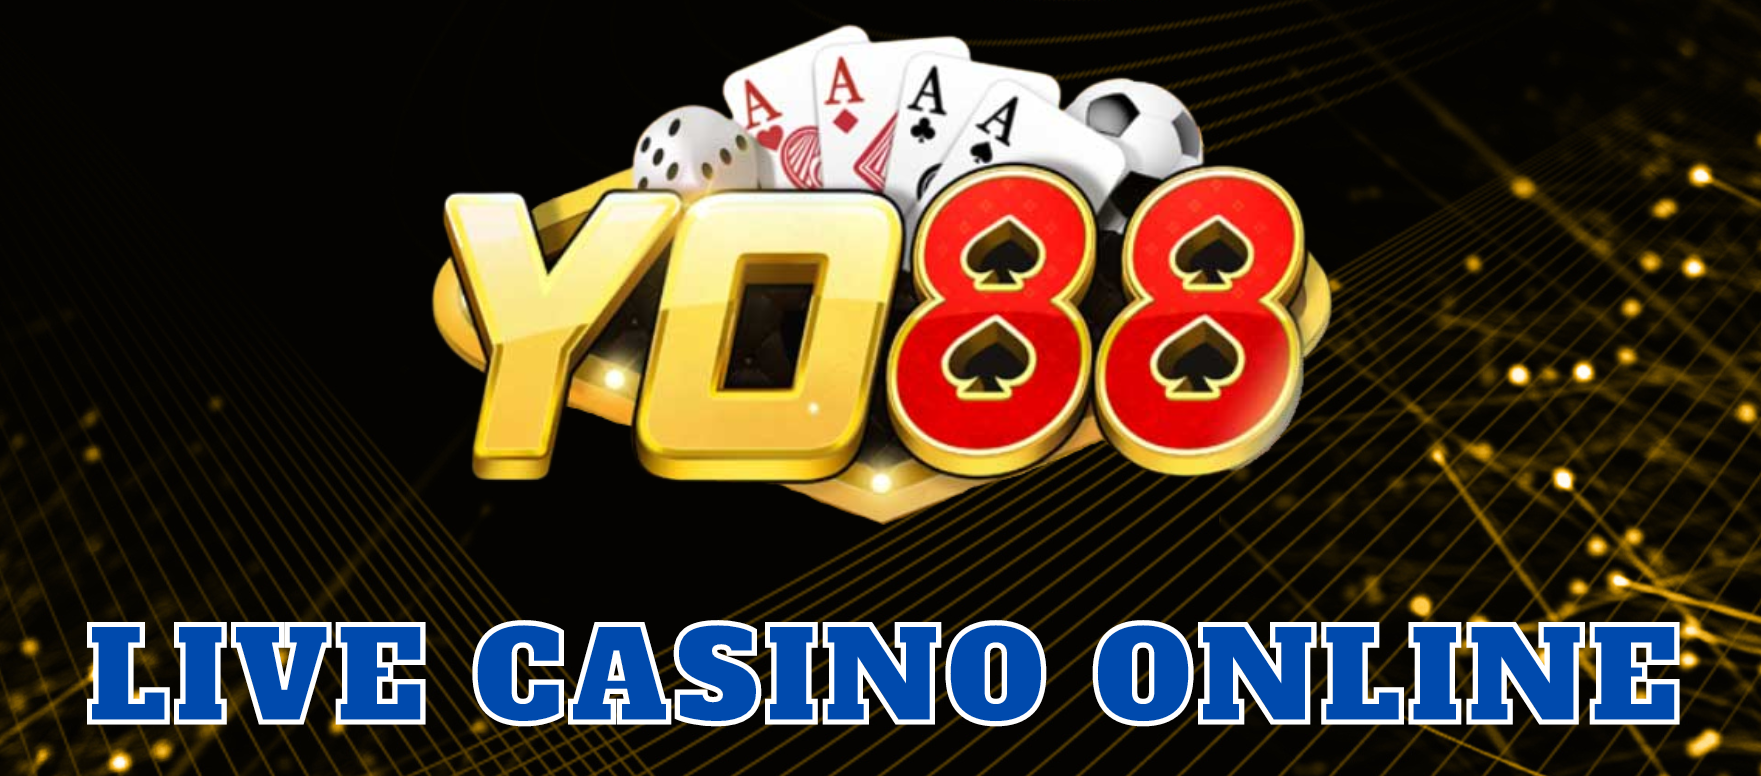 Live casino online yo88